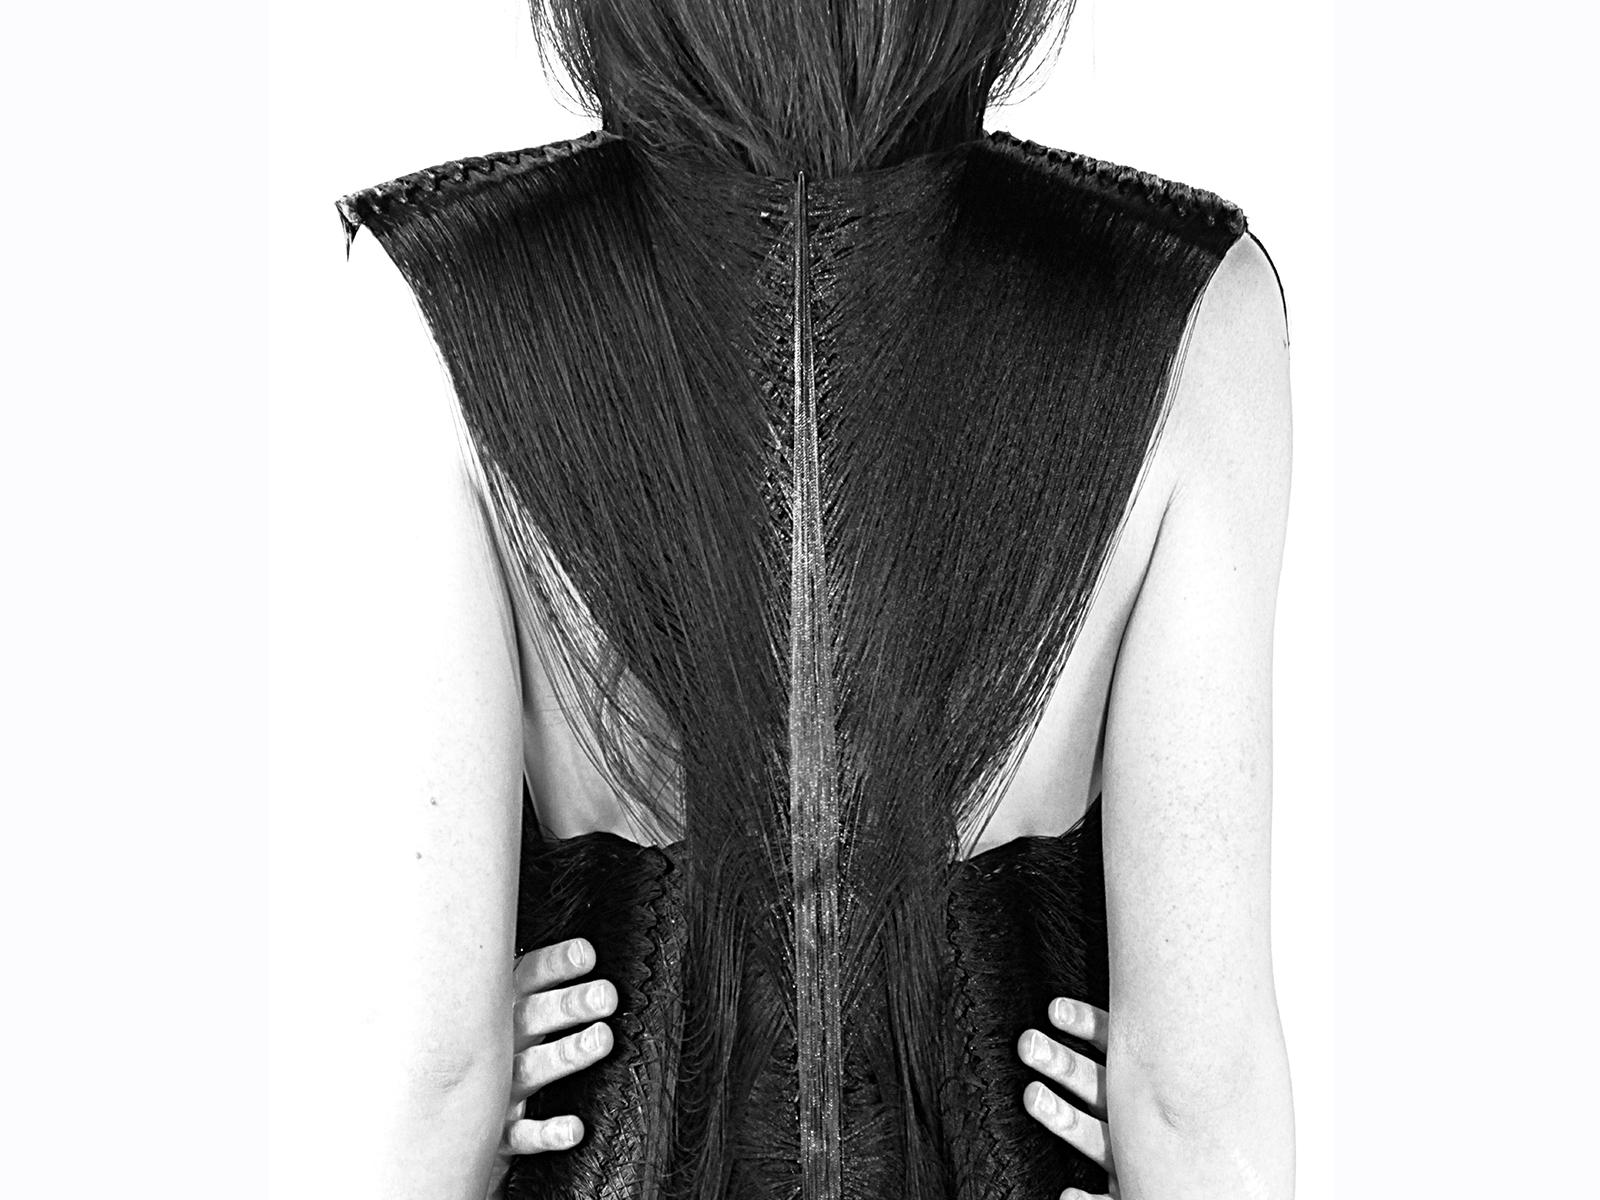 Back bone dress by Jeanne Vicerial - photo Doris Lanzman, model Julia Gault